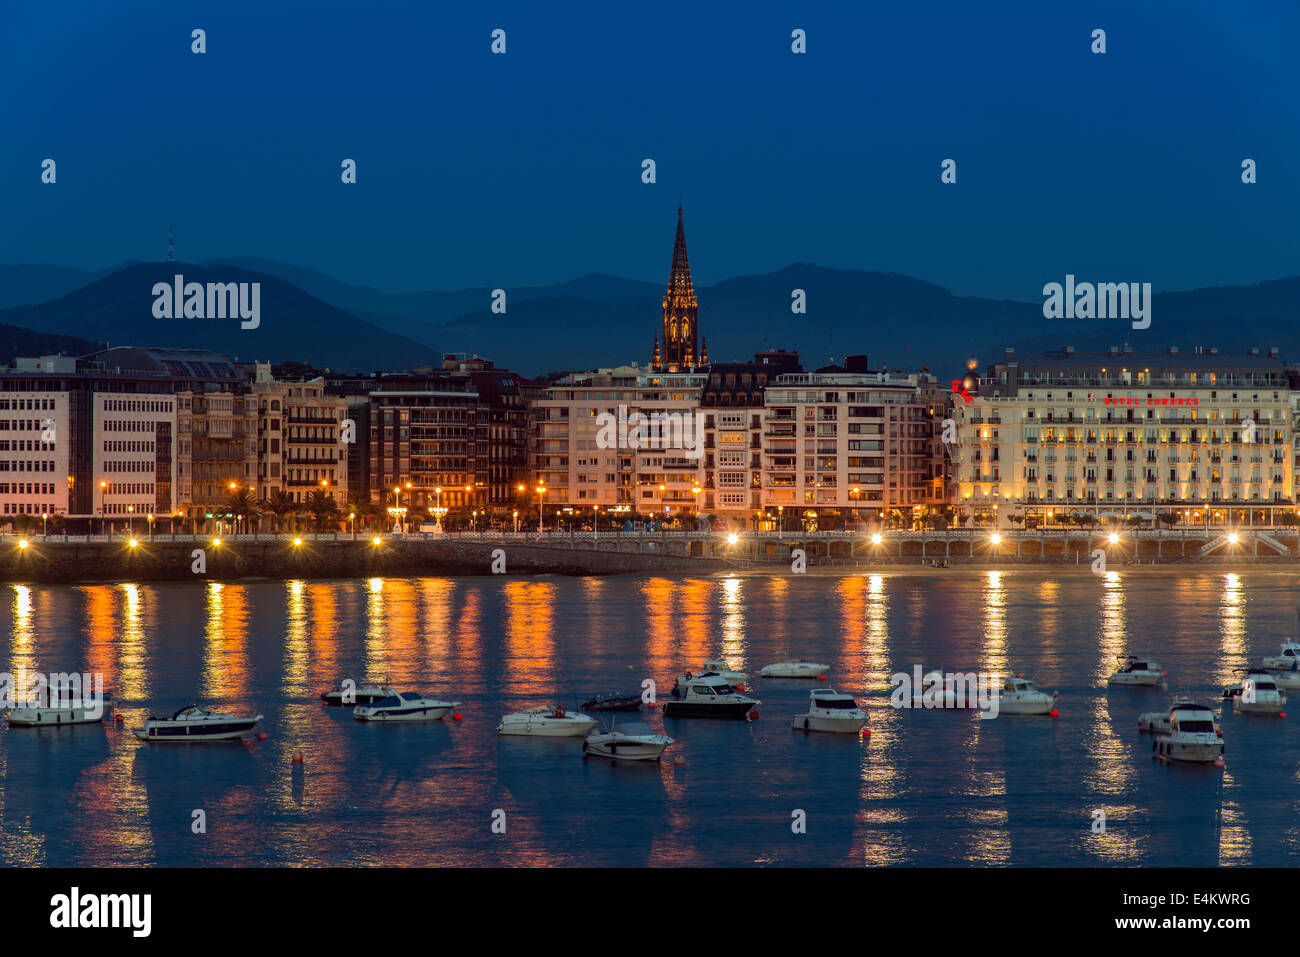 City skyline by night, Donostia San Sebastian, Gipuzkoa, Basque Country, Spain Stock Photo